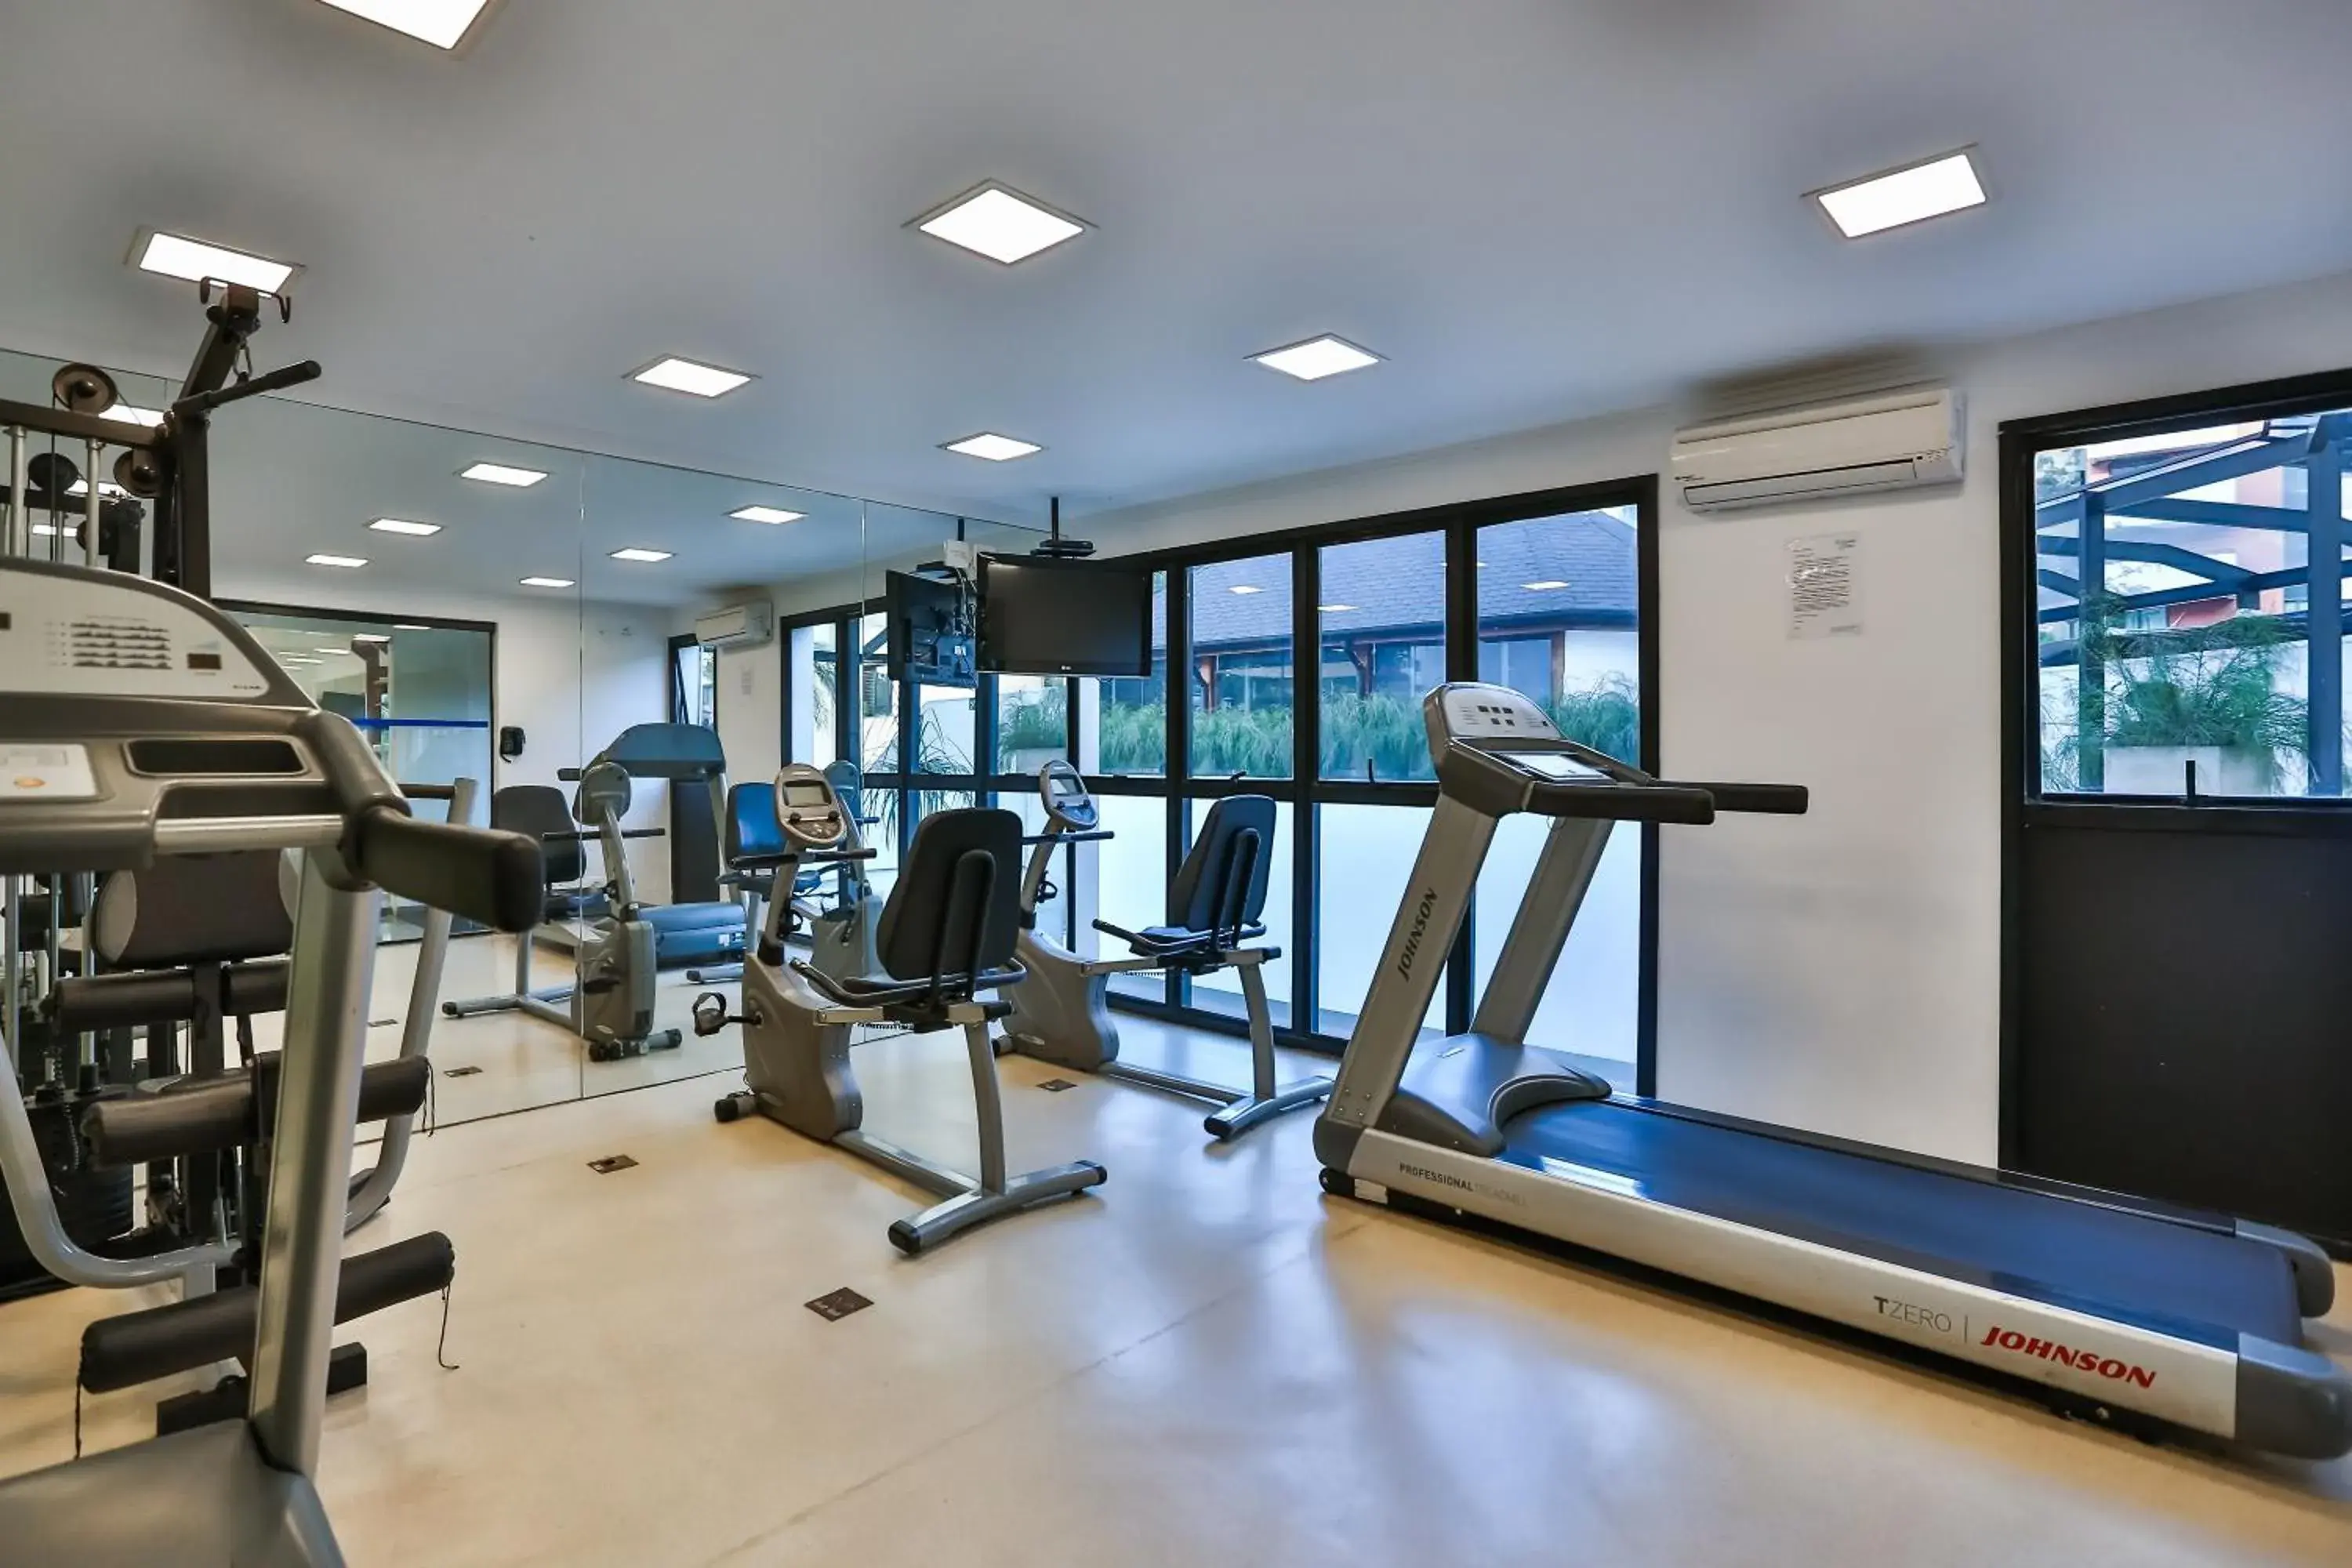 Fitness centre/facilities, Fitness Center/Facilities in Roomo Itaim Bibi by Transamerica